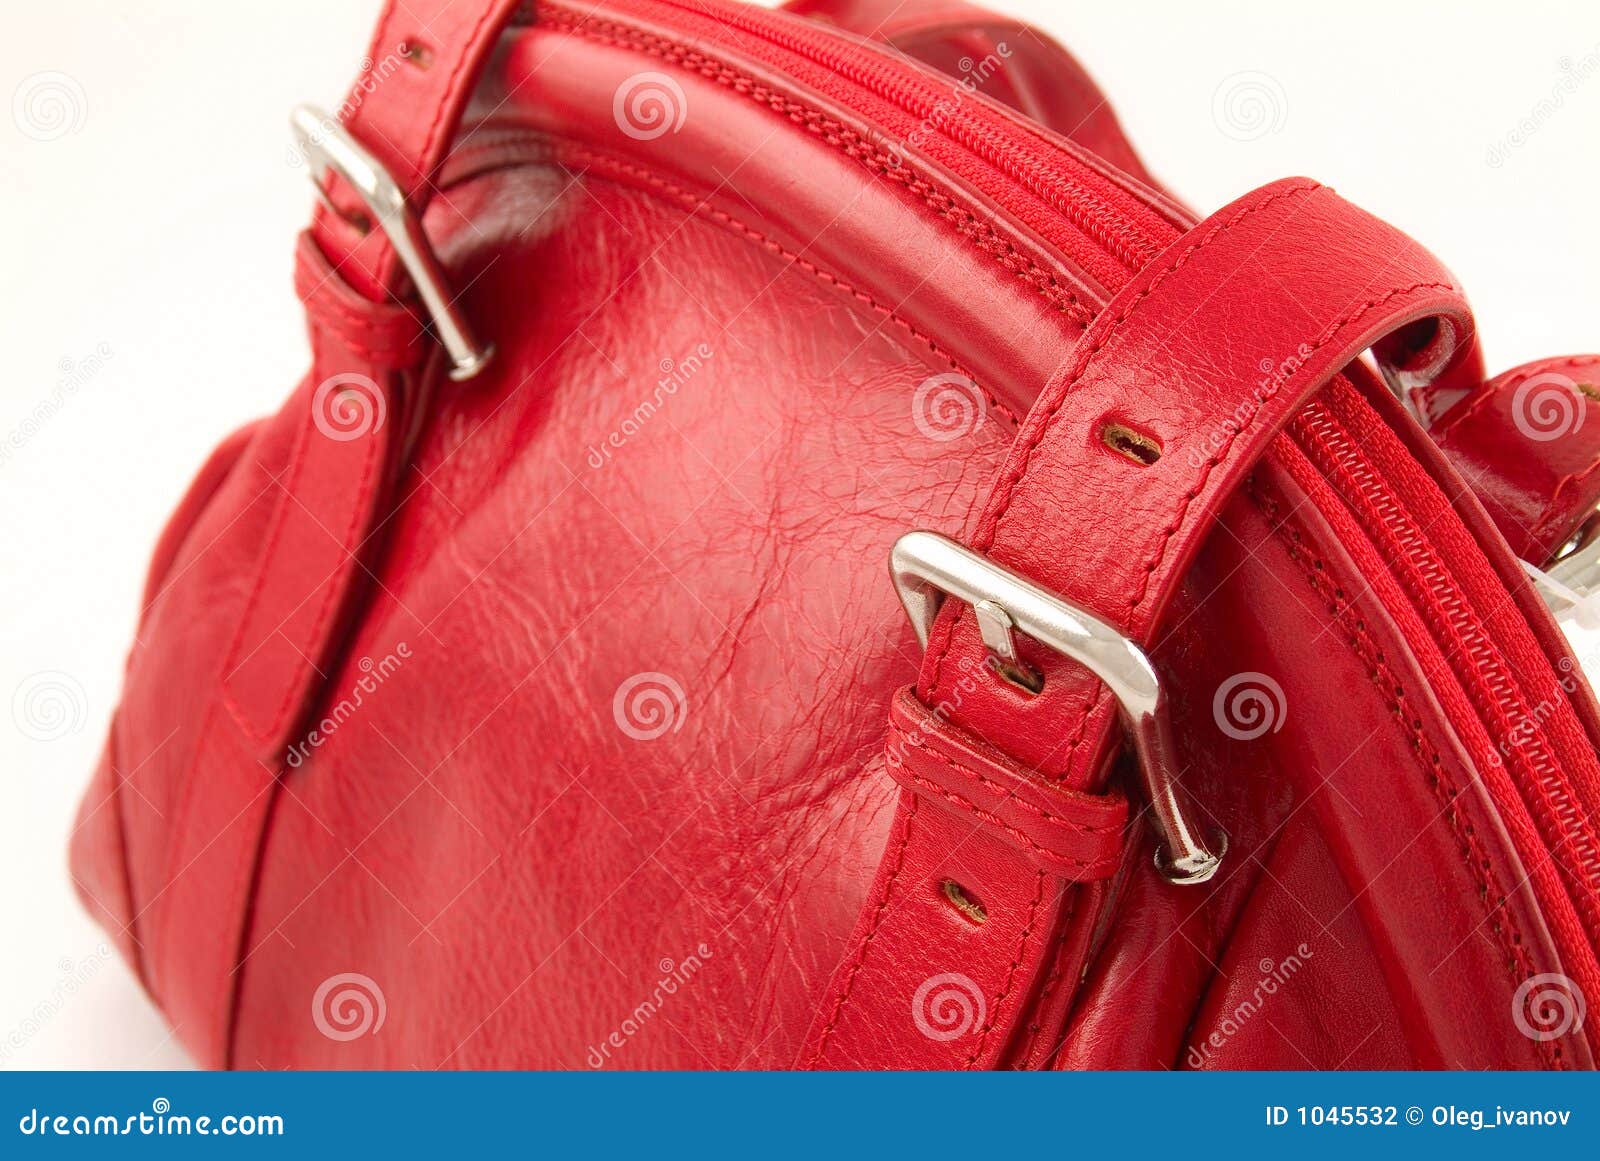 Red leather bag stock photo. Image of handbag, stitches - 1045532